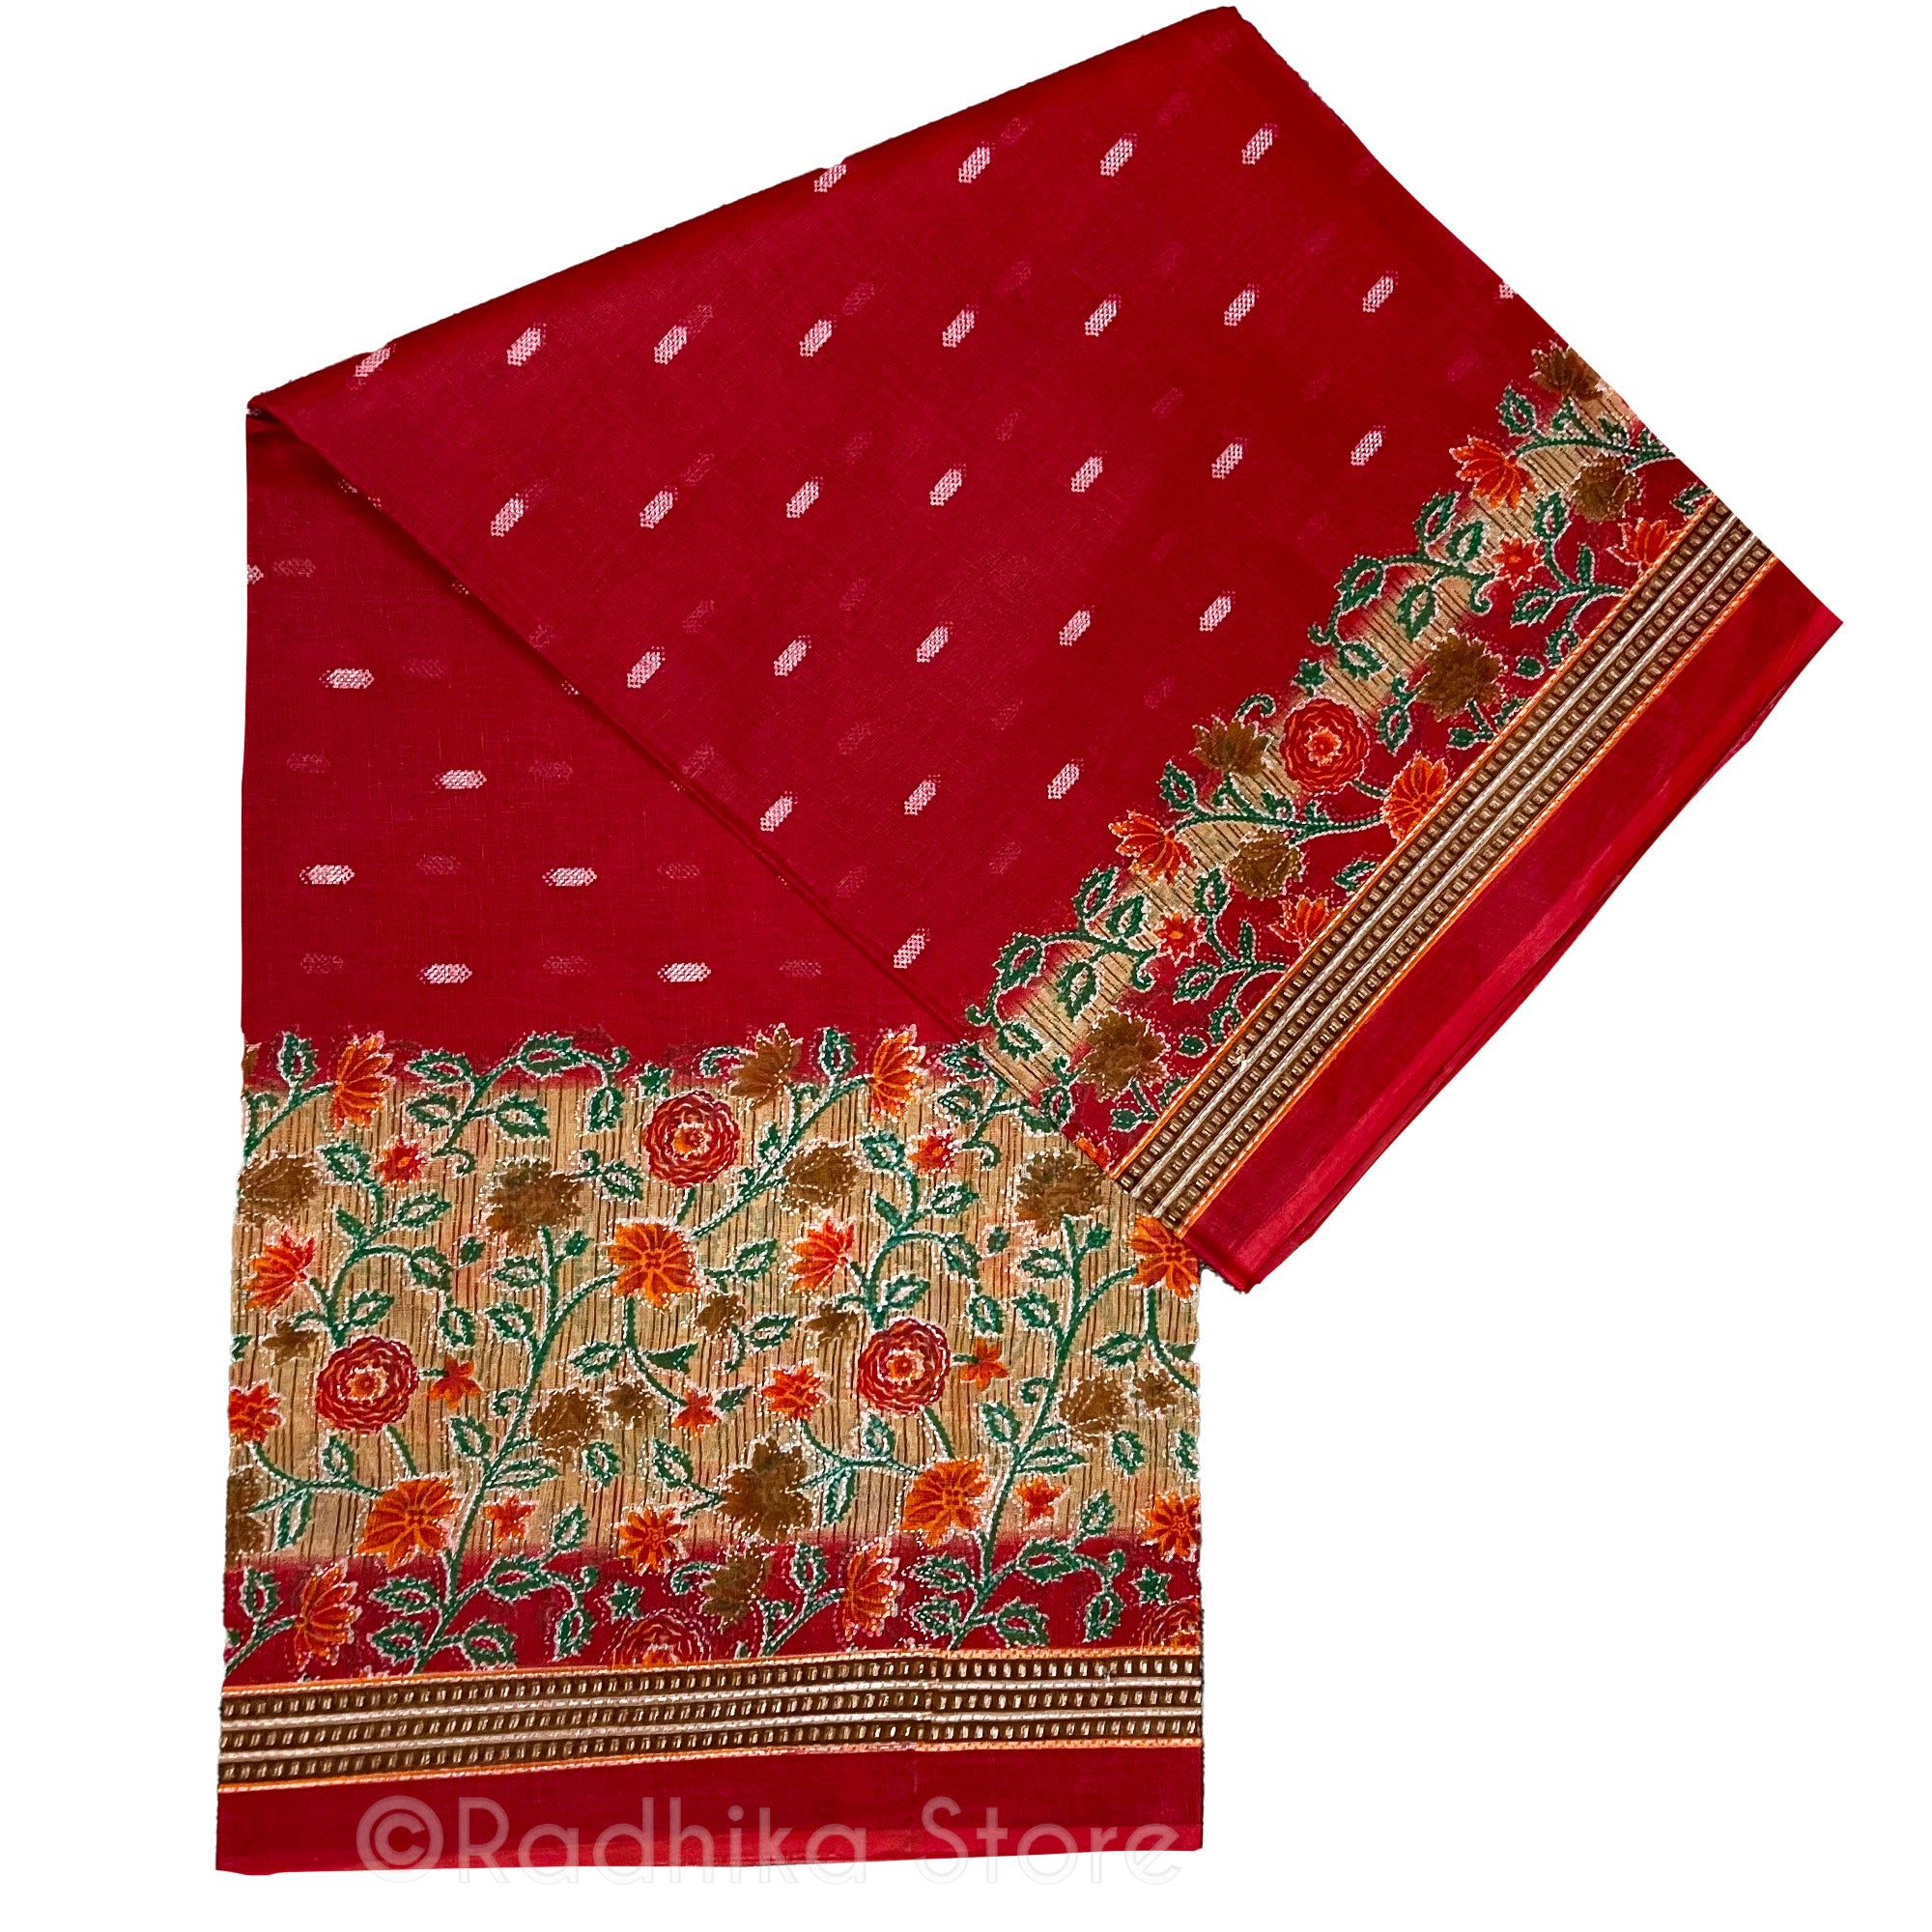 Bengali Flowers- Printed Cotton Saree - Red And Golden Tan